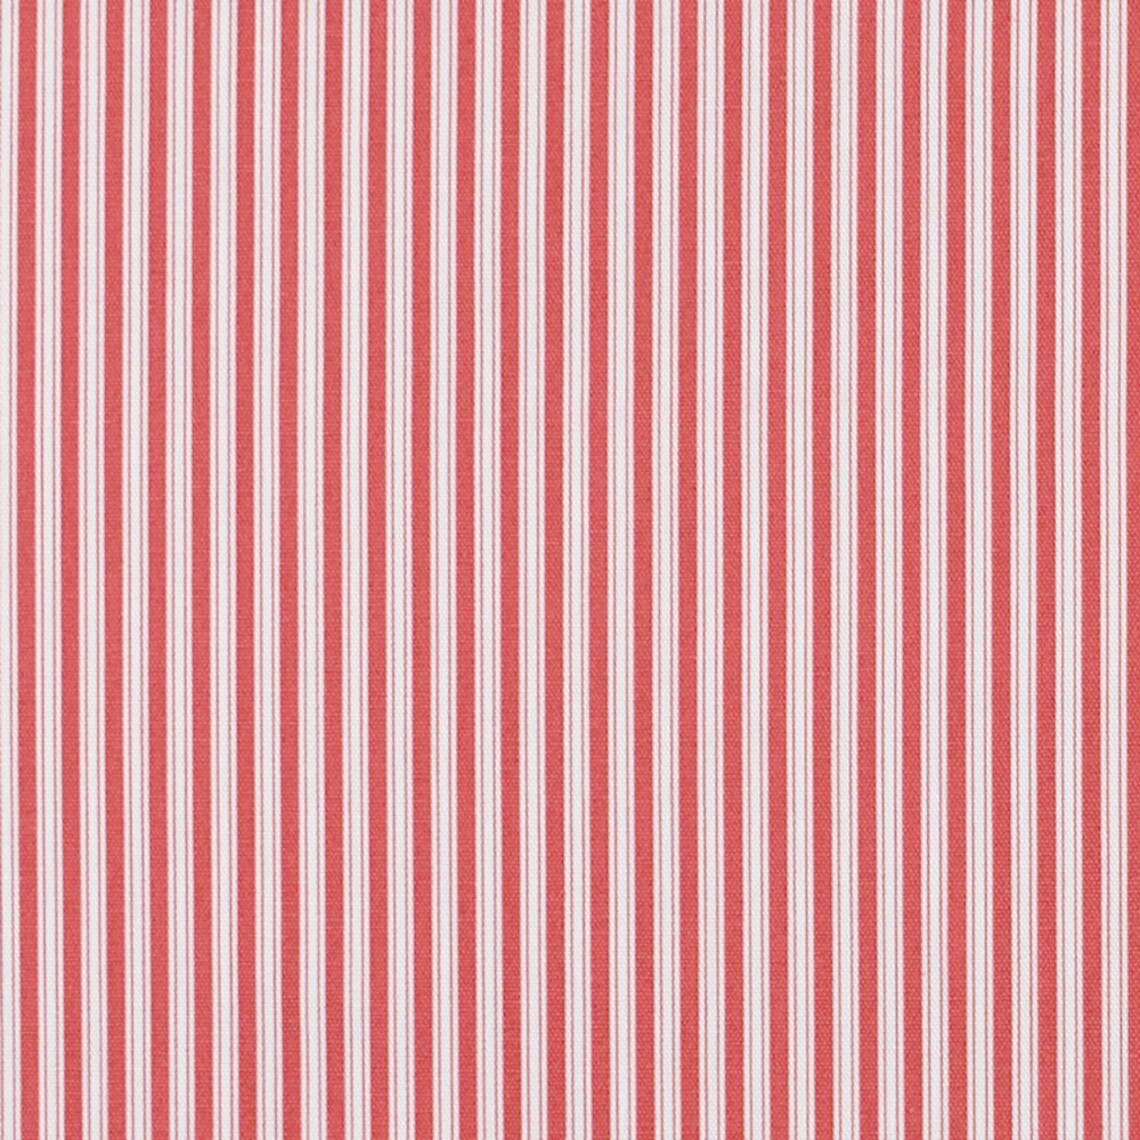 Duvet Cover in Polo Calypso Rose Red Stripe on Off-White